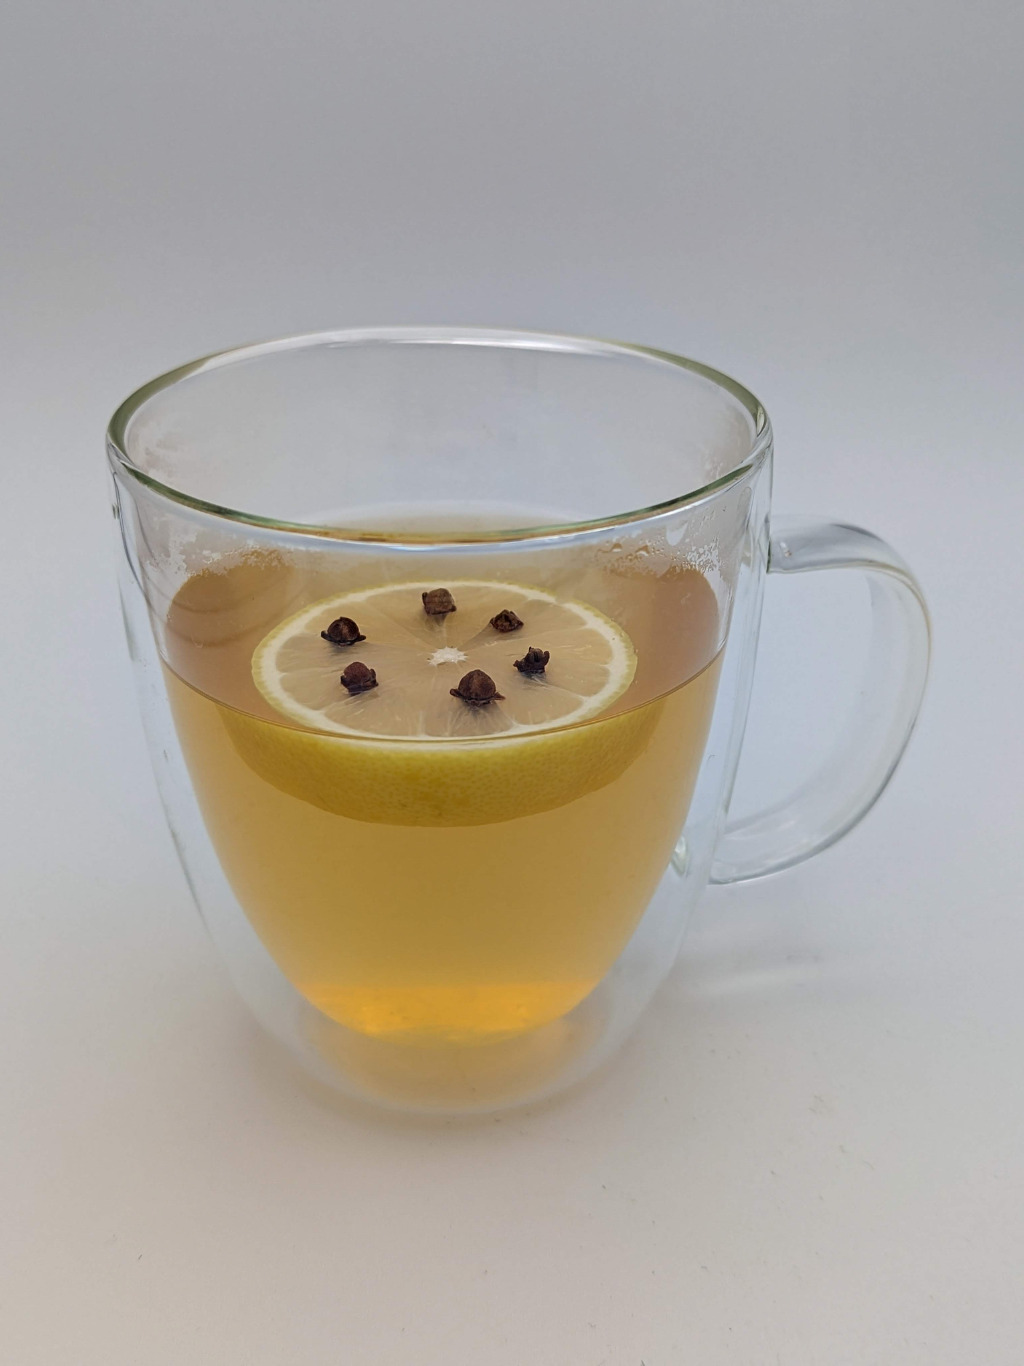 Light Gold liquid in a glass mug with a lemon wheel and clove garnish